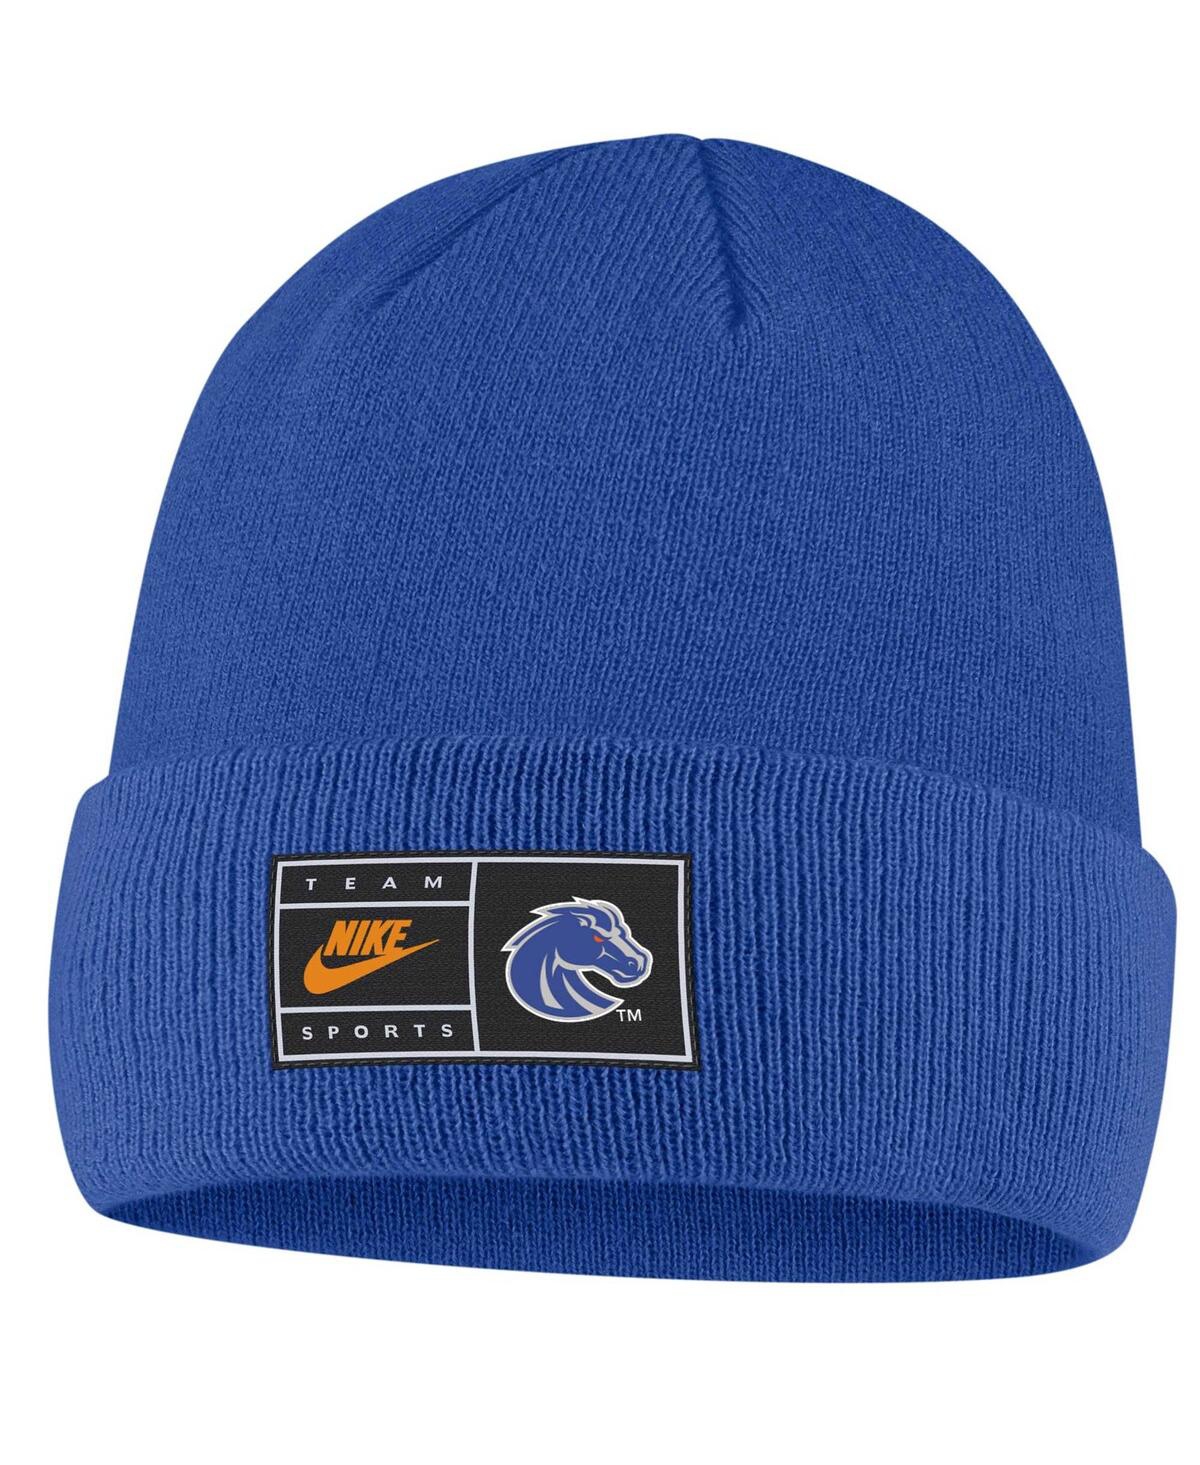 Shop Nike Men's  Royal Boise State Broncos Utility Cuffed Knit Hat